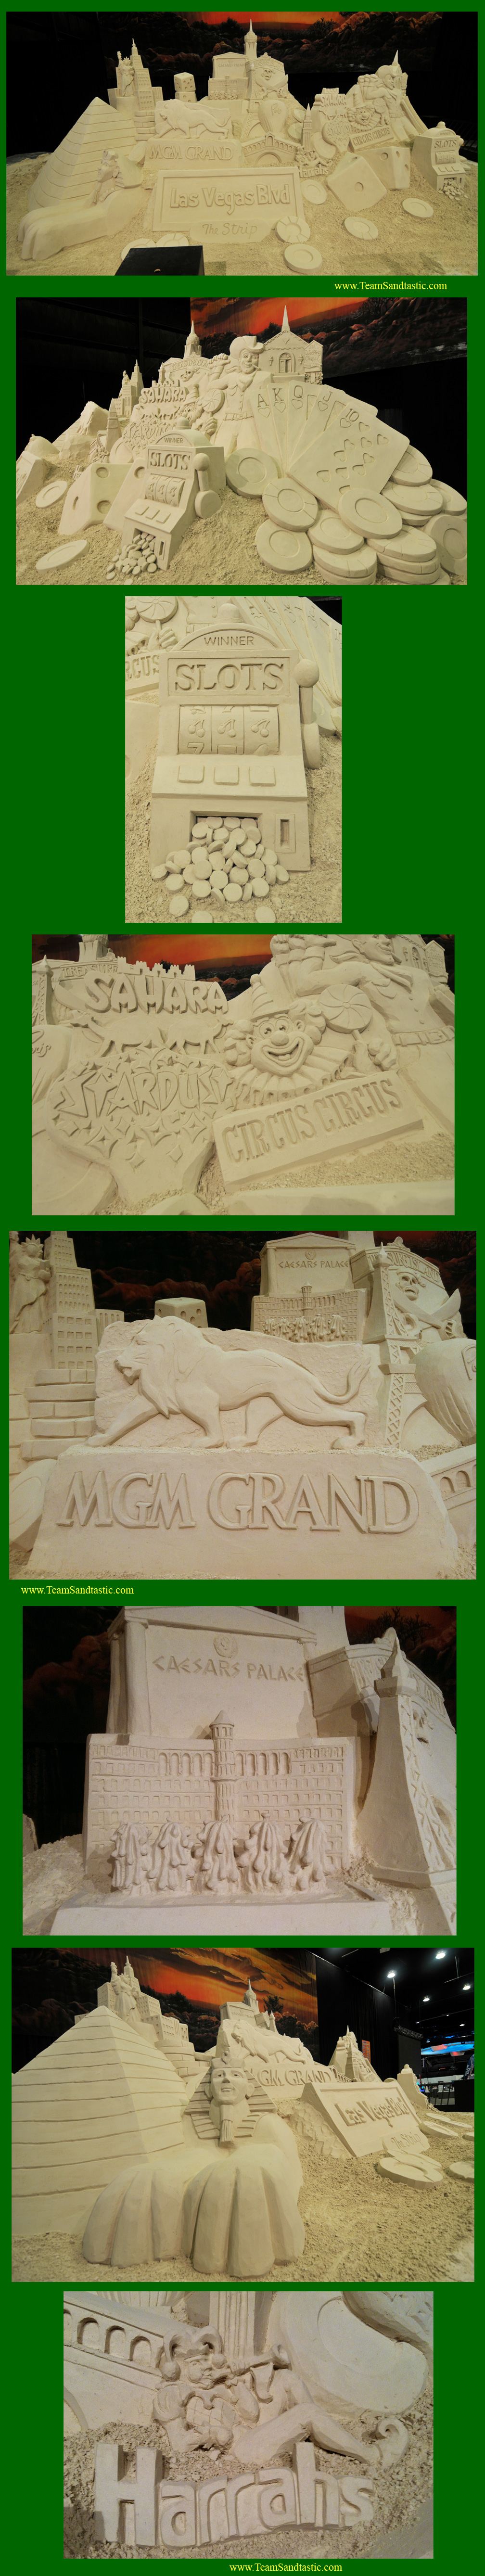 Las Vegas Themed Sand Sculpture